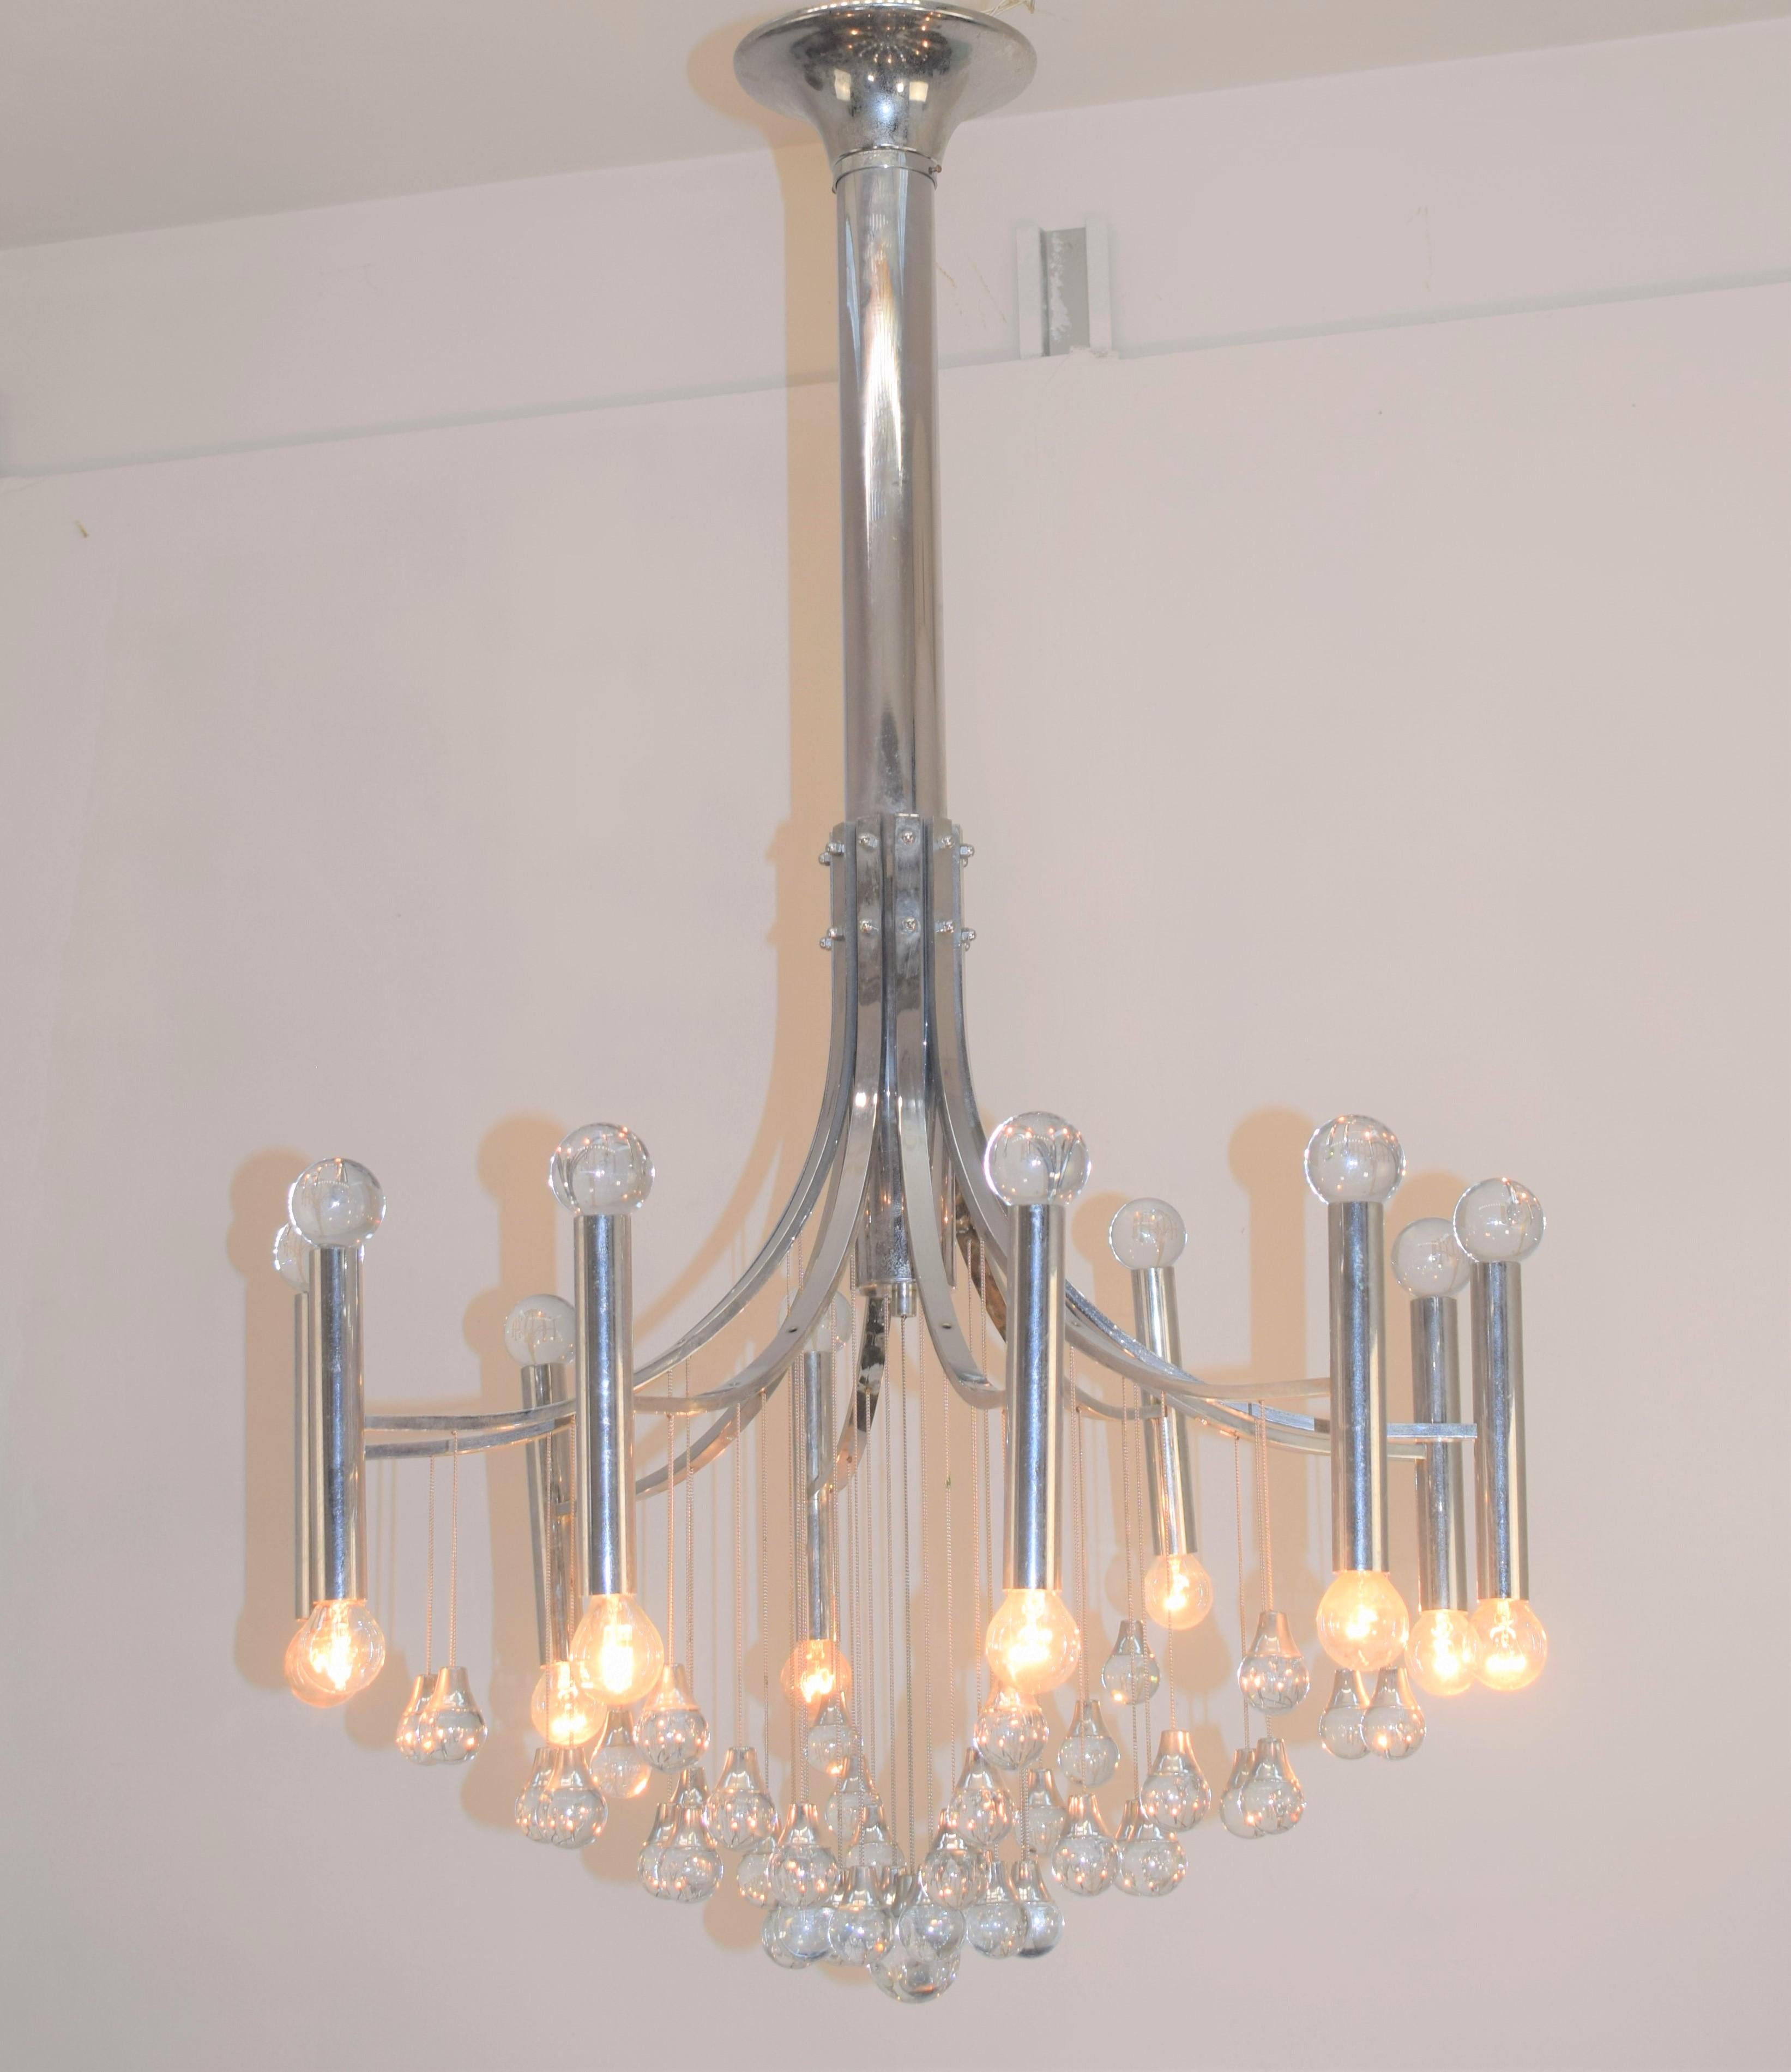 Italian chandelier by Sciolari, 1970s.

Dimensions: H= 112 cm; D= 65 cm.